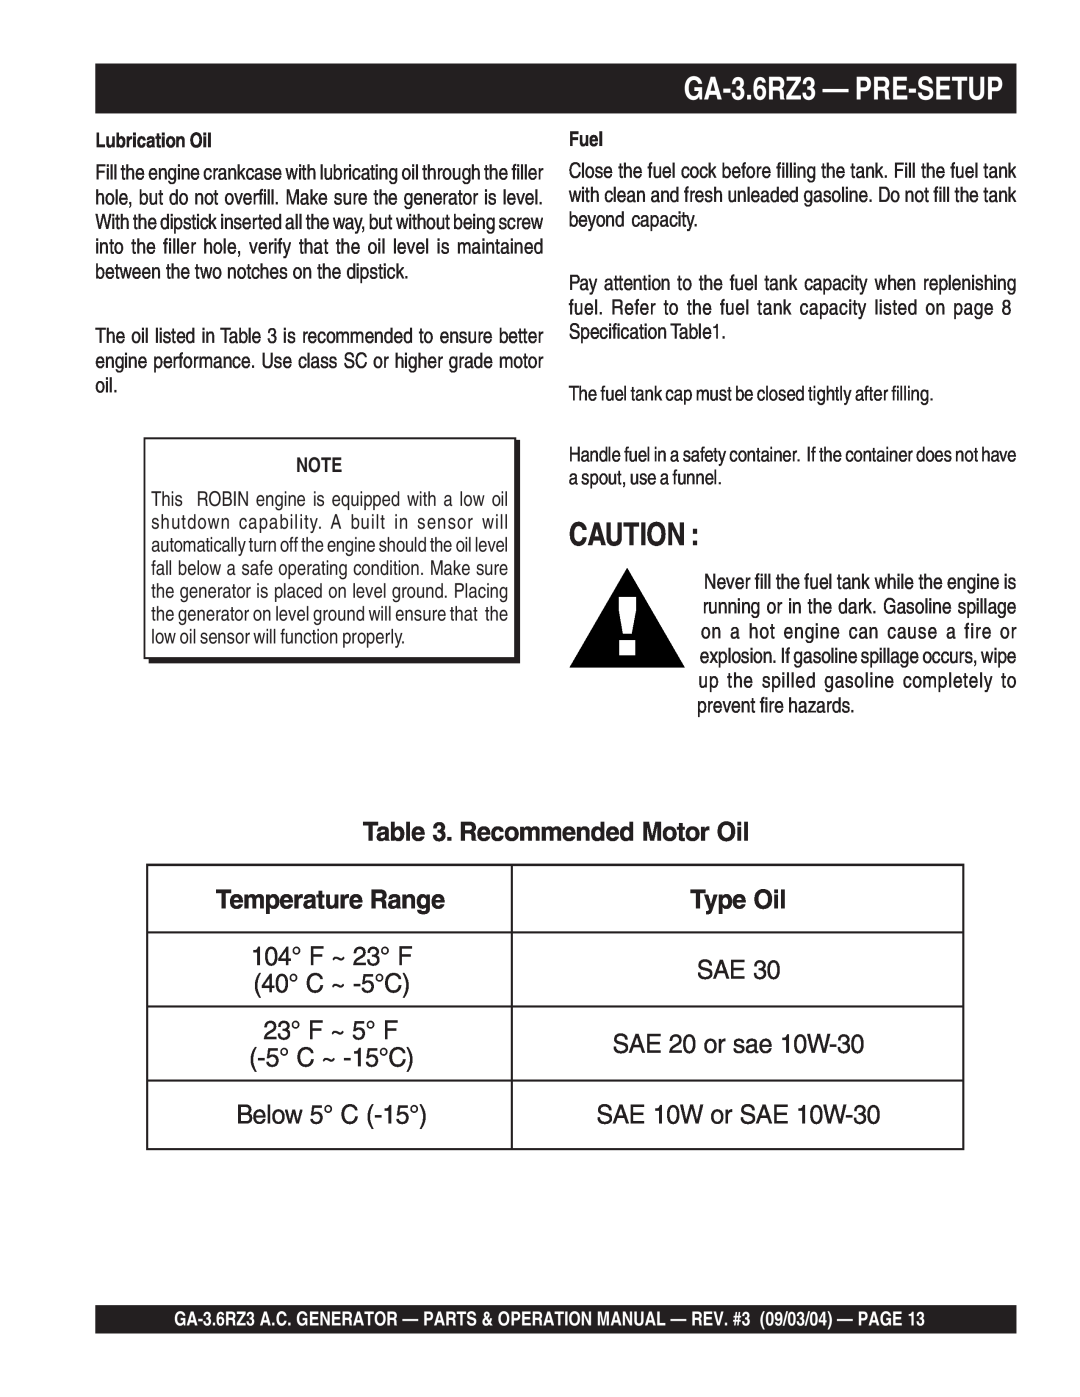 Multiquip Temperature Range, Type Oil, GA-3.6RZ3— PRE-SETUP, Recommended Motor Oil, Below 5 C, SAE 10W or SAE 10W-30 